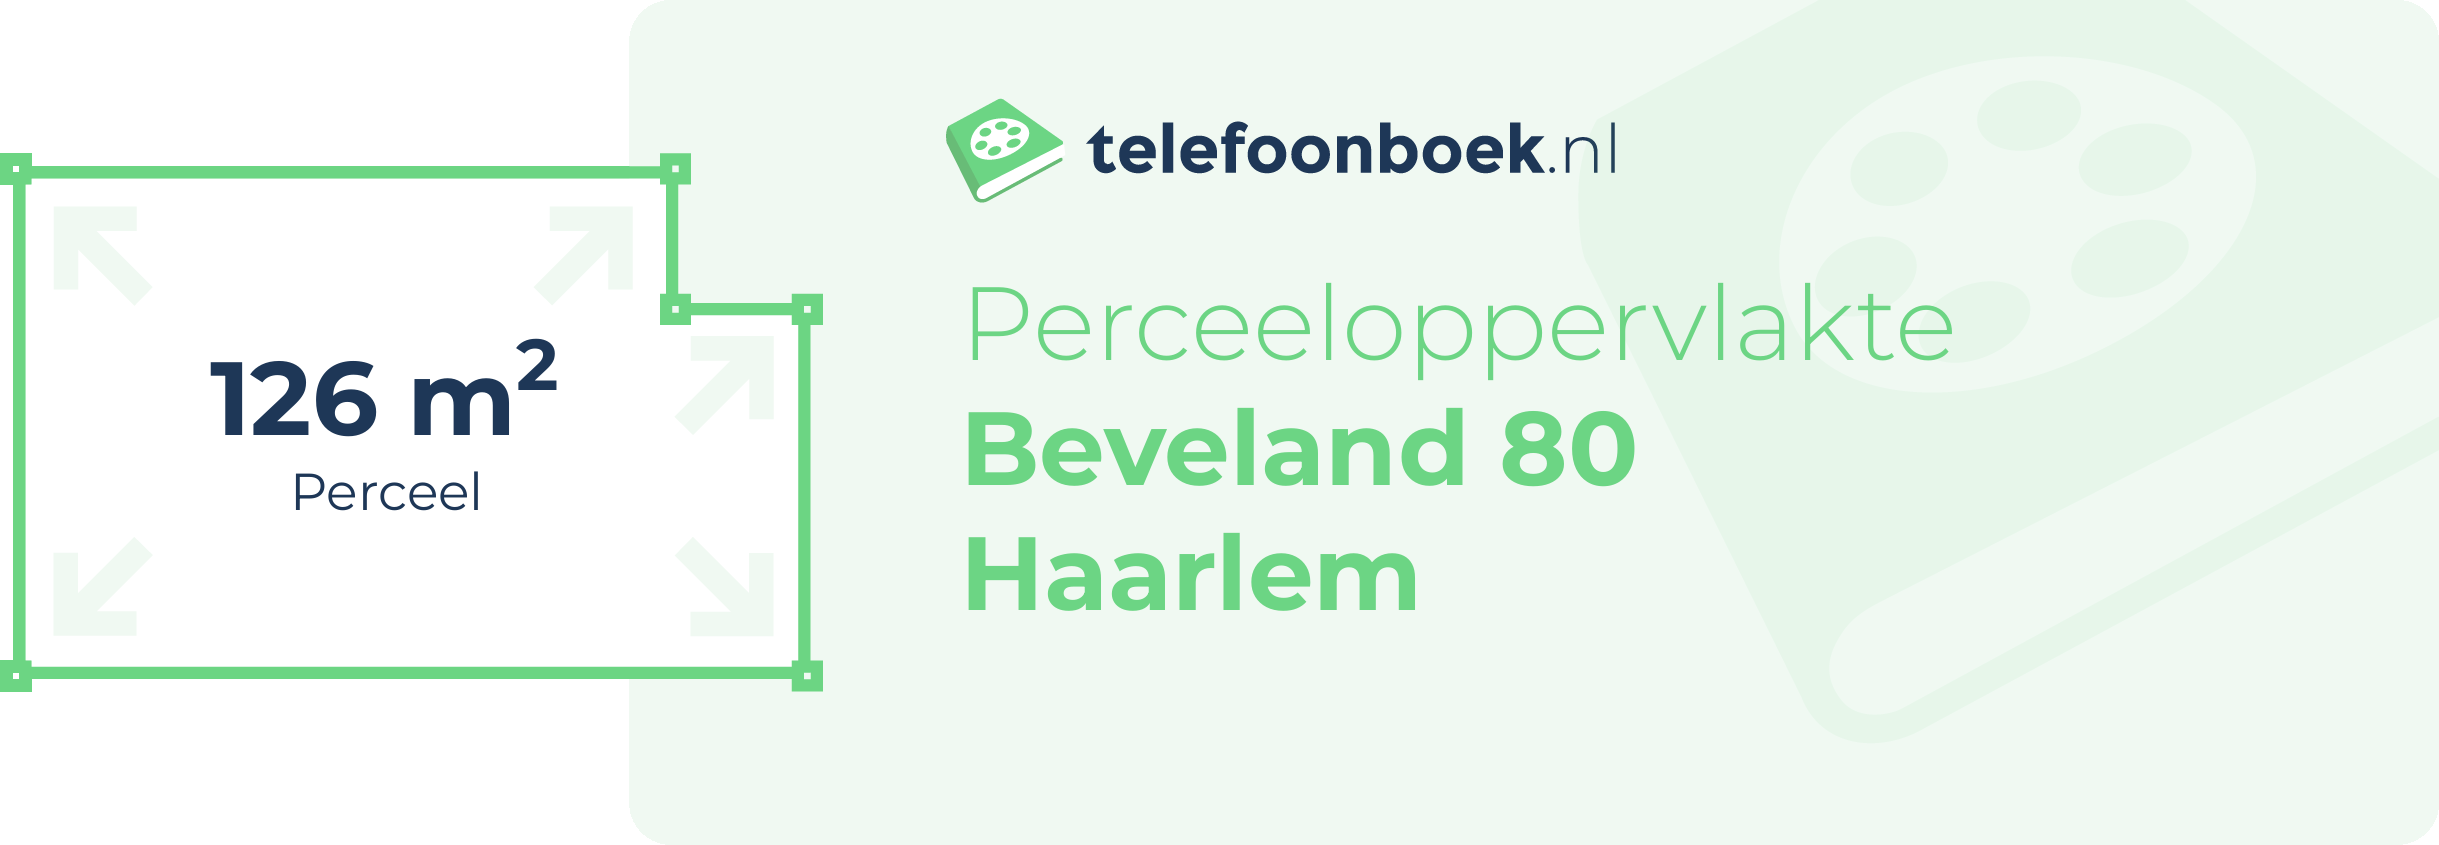 Perceeloppervlakte Beveland 80 Haarlem